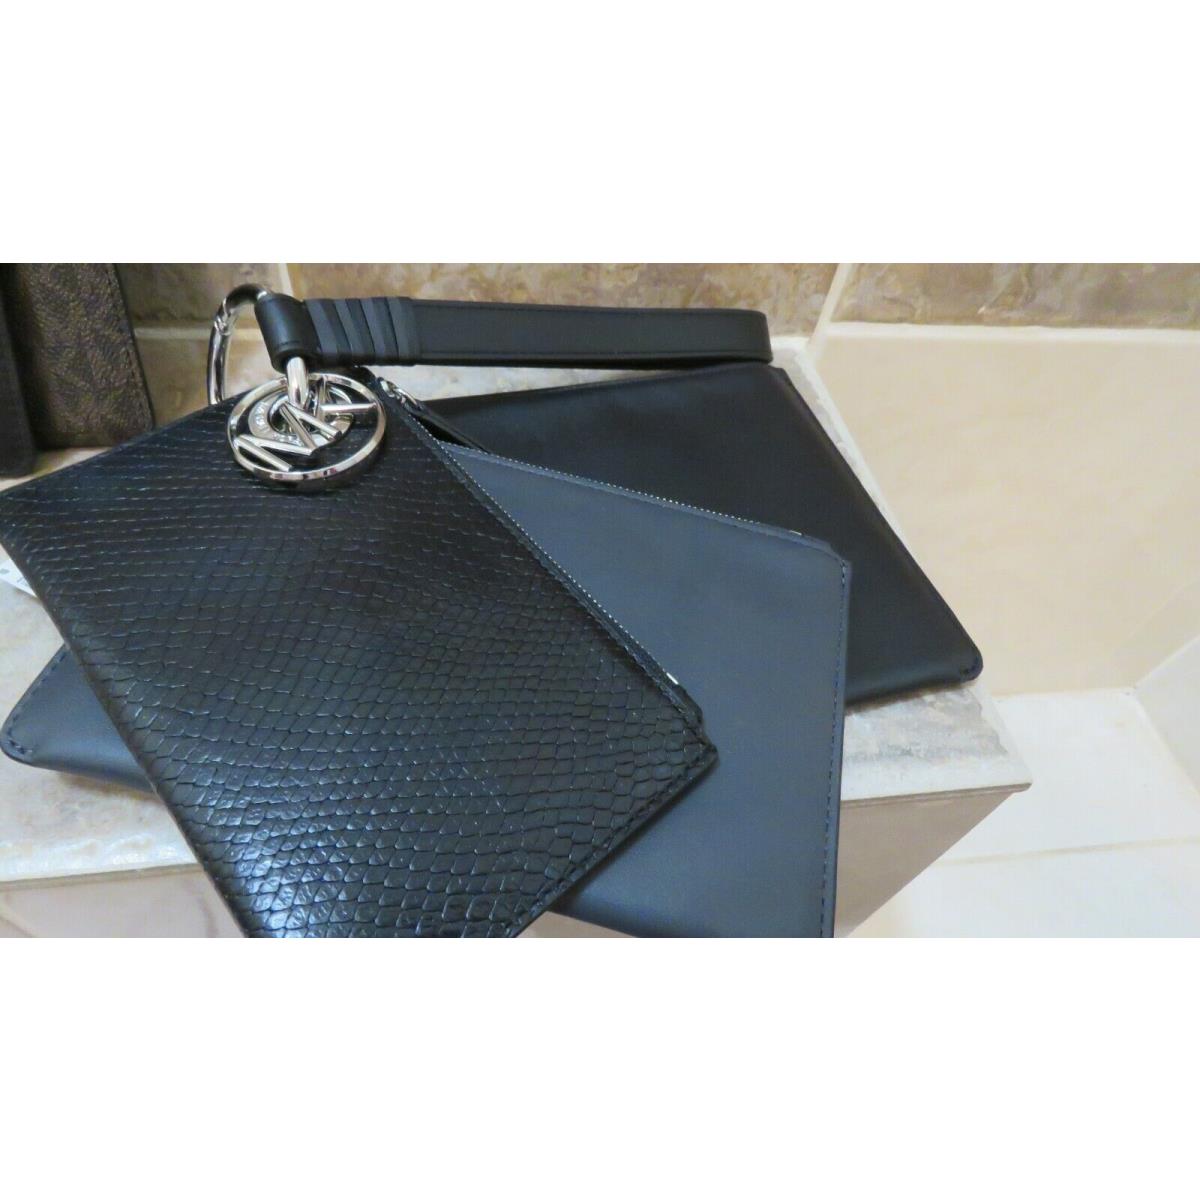 Michael Kors Wristlet/clutch Set: 3 Sizes + Charm + Ring + Strap Interchangeable black and gray